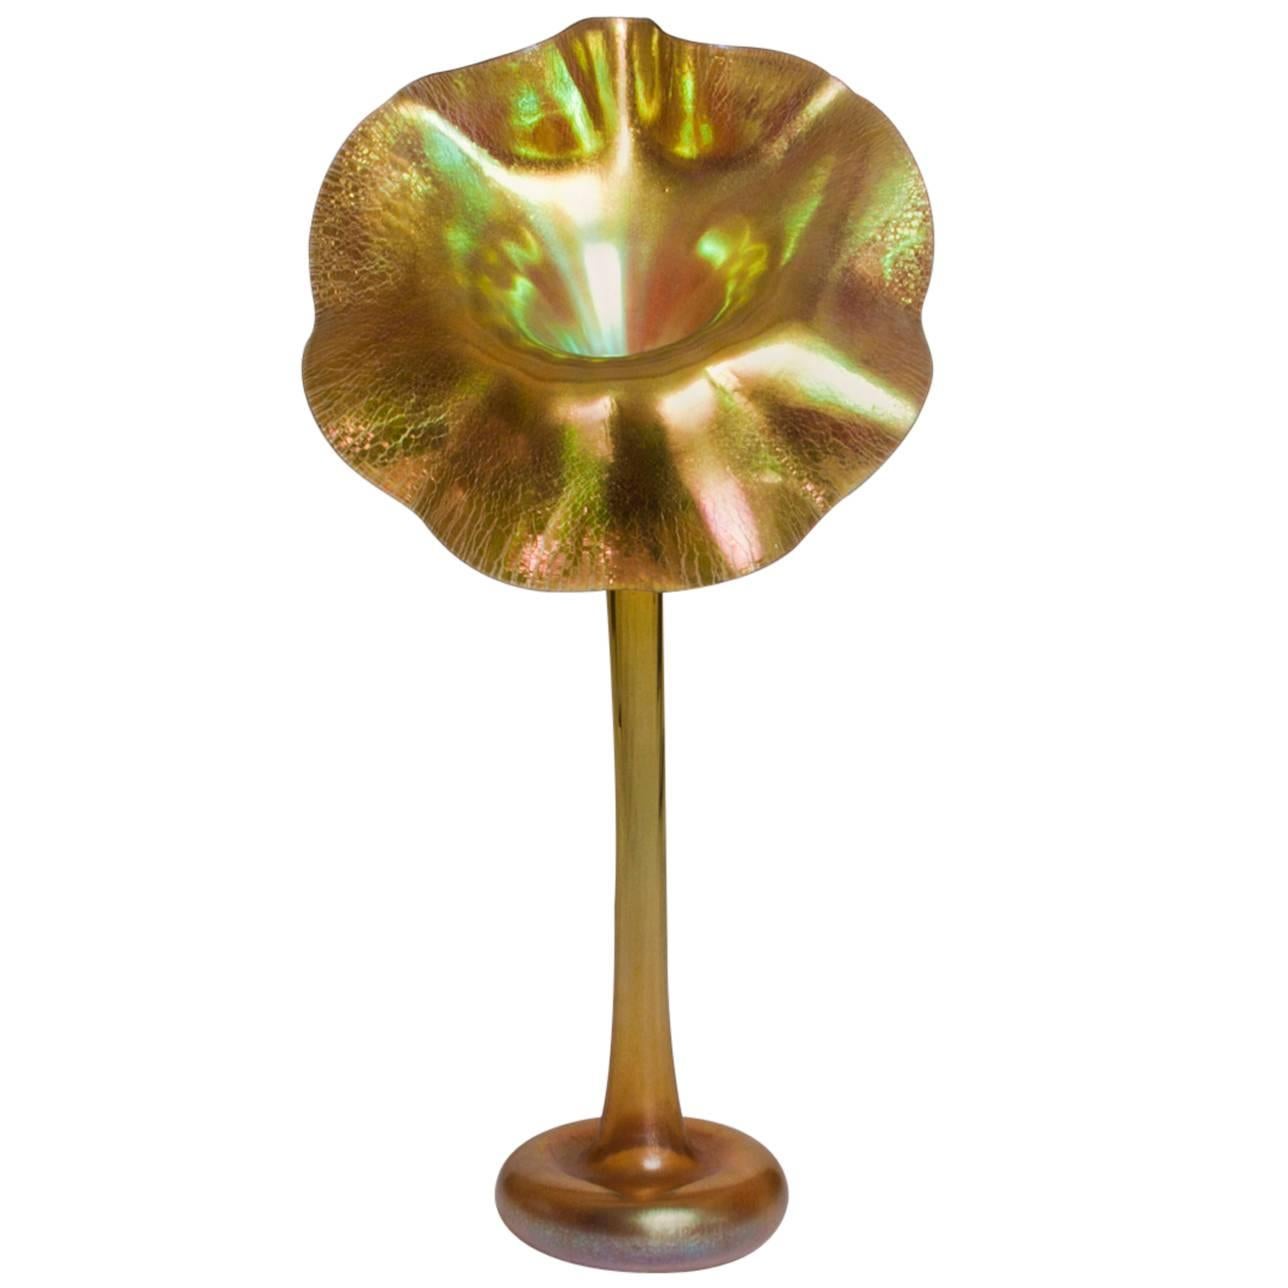 Tiffany Studios Favrile Glass 'Jack in the Pulpit' Vase For Sale